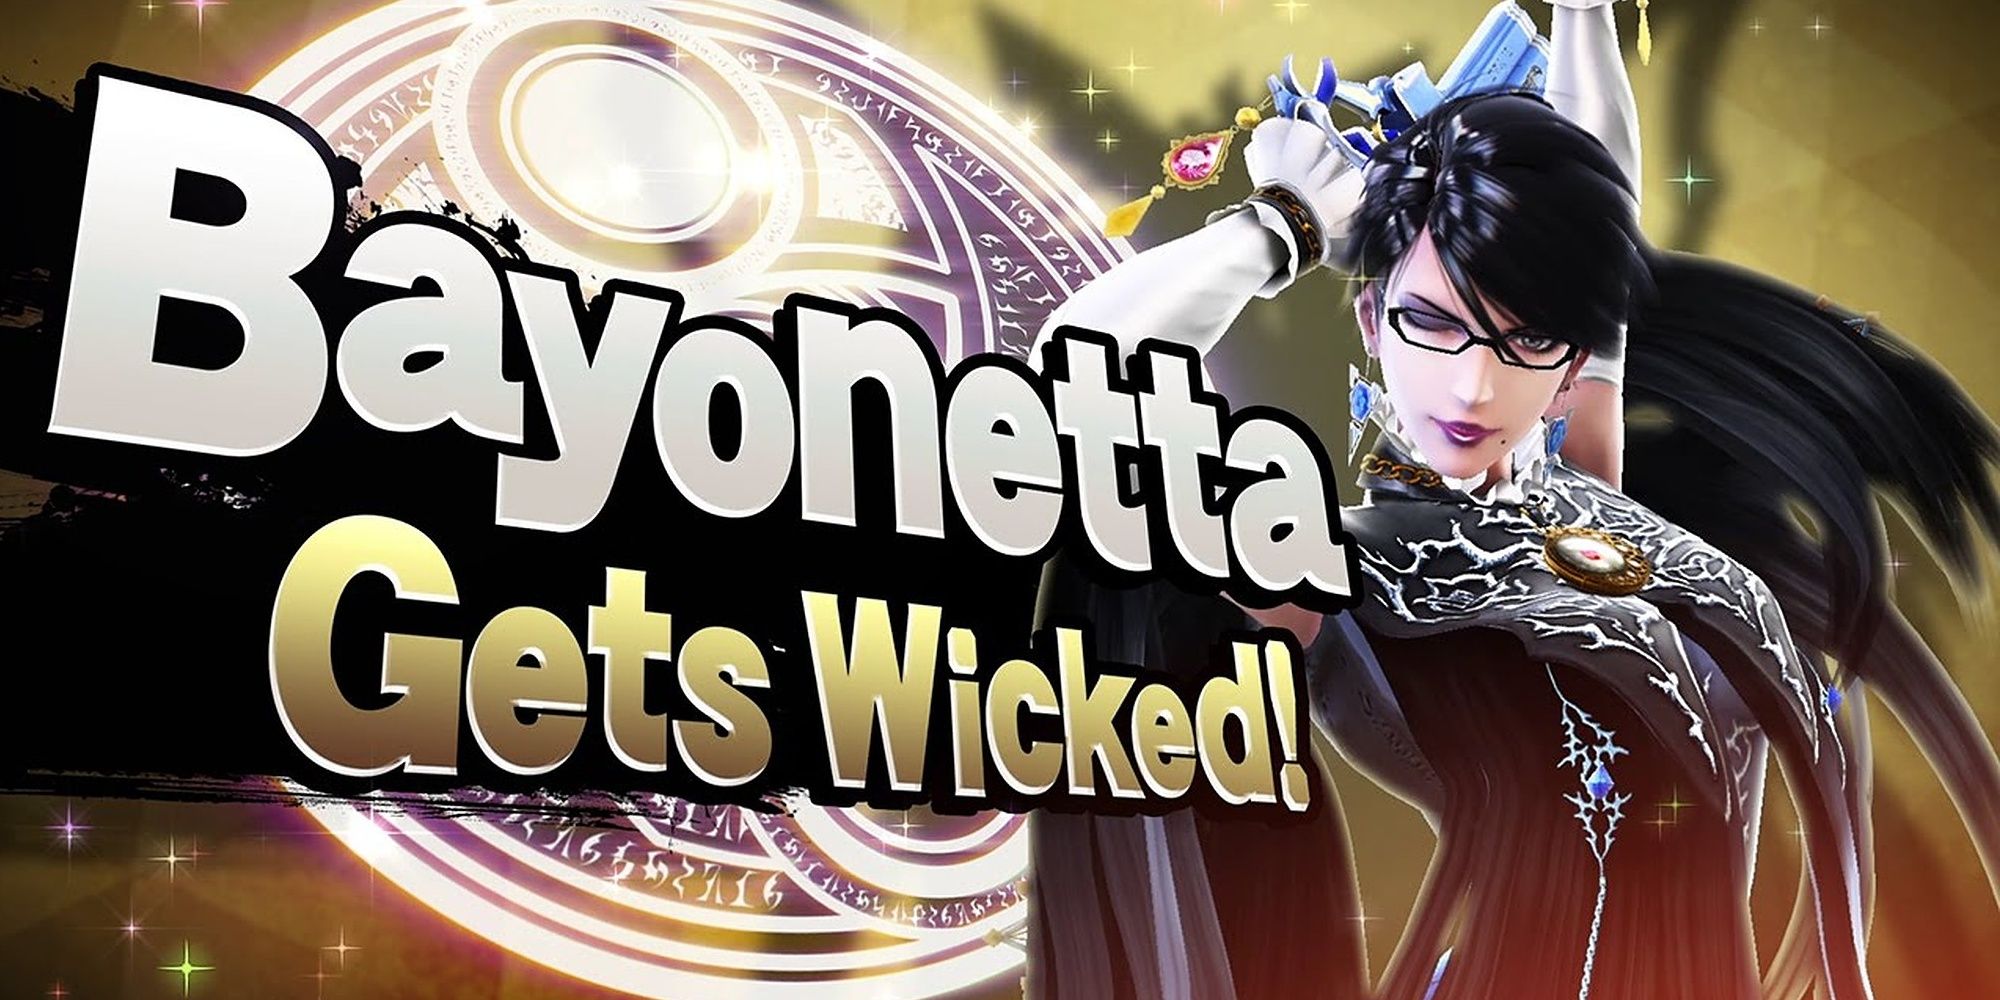 Bayonetta 2 in her Super Smash Bros. 4 3DS/Wii U reveal trailer Bayonetta Gets Wicked!